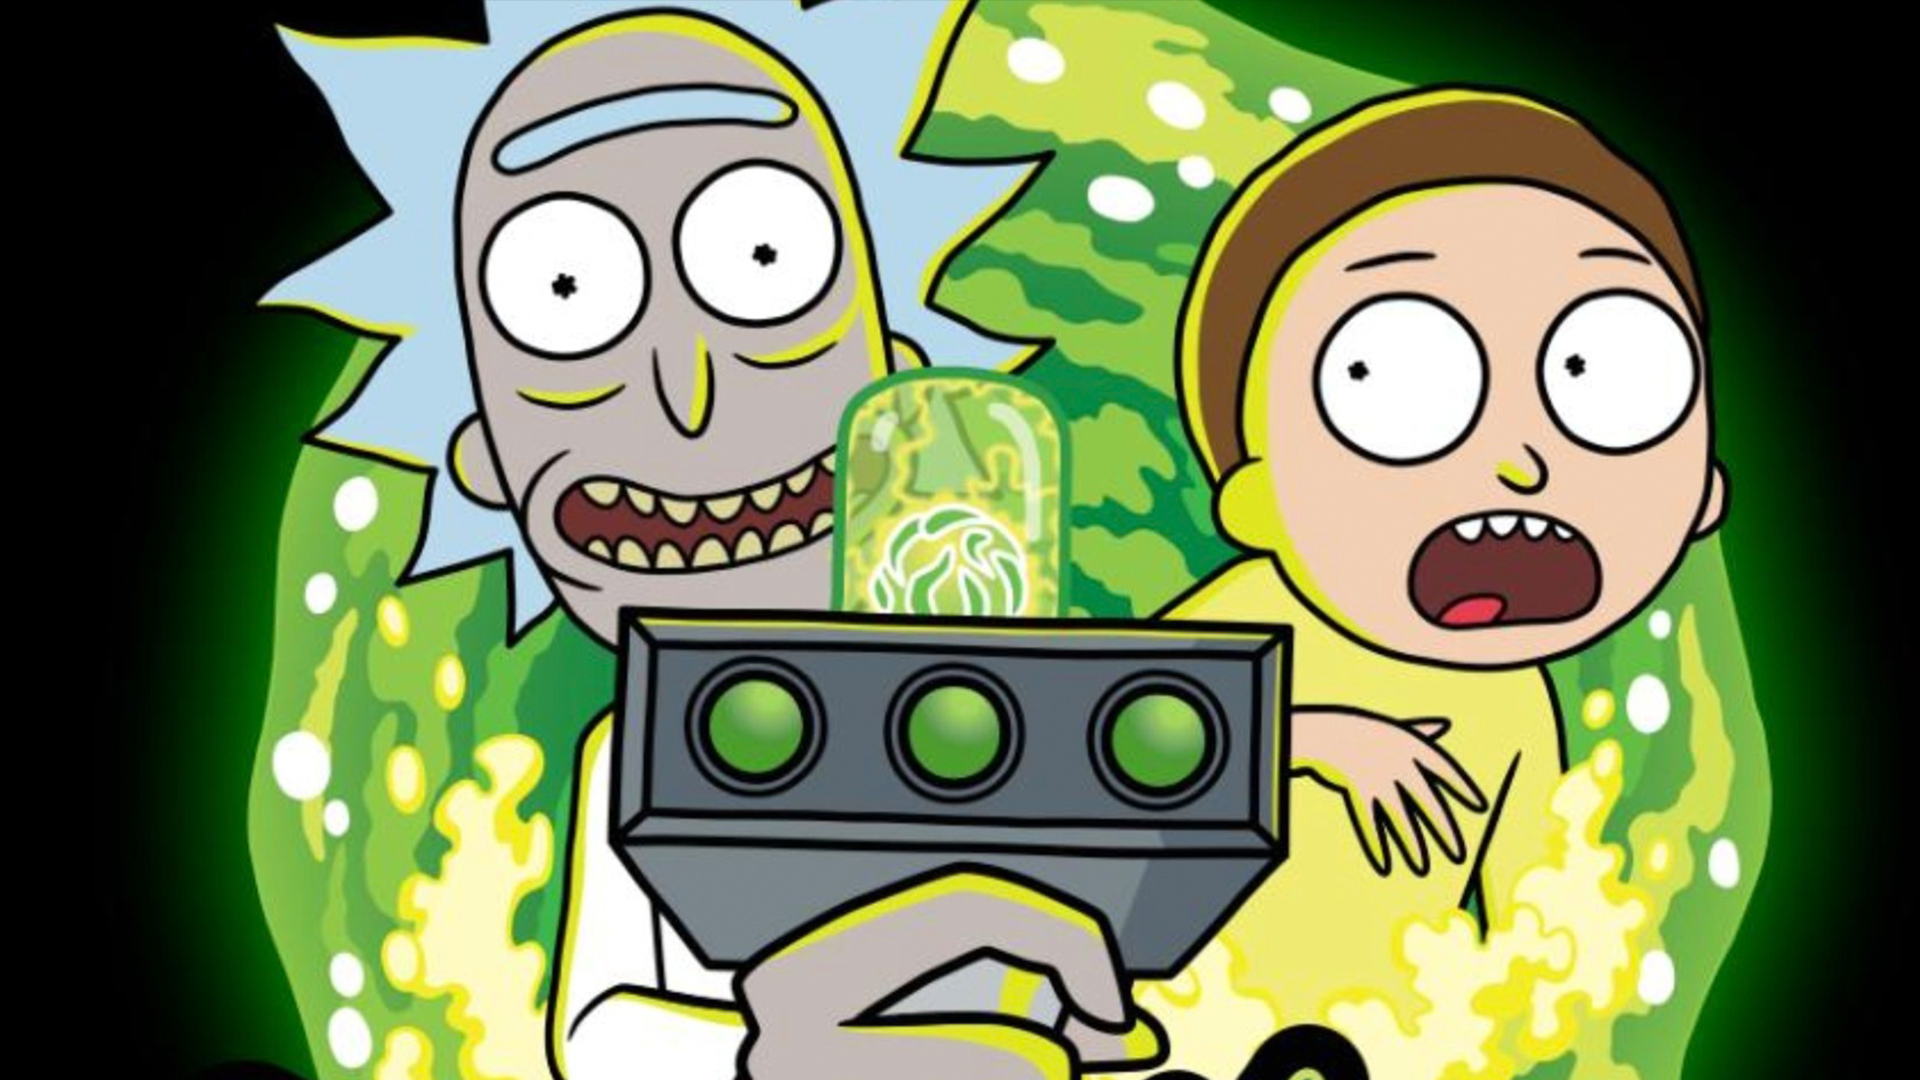 Rick-and-Morty-Season-4-Episode-1-Air-Date.jpg